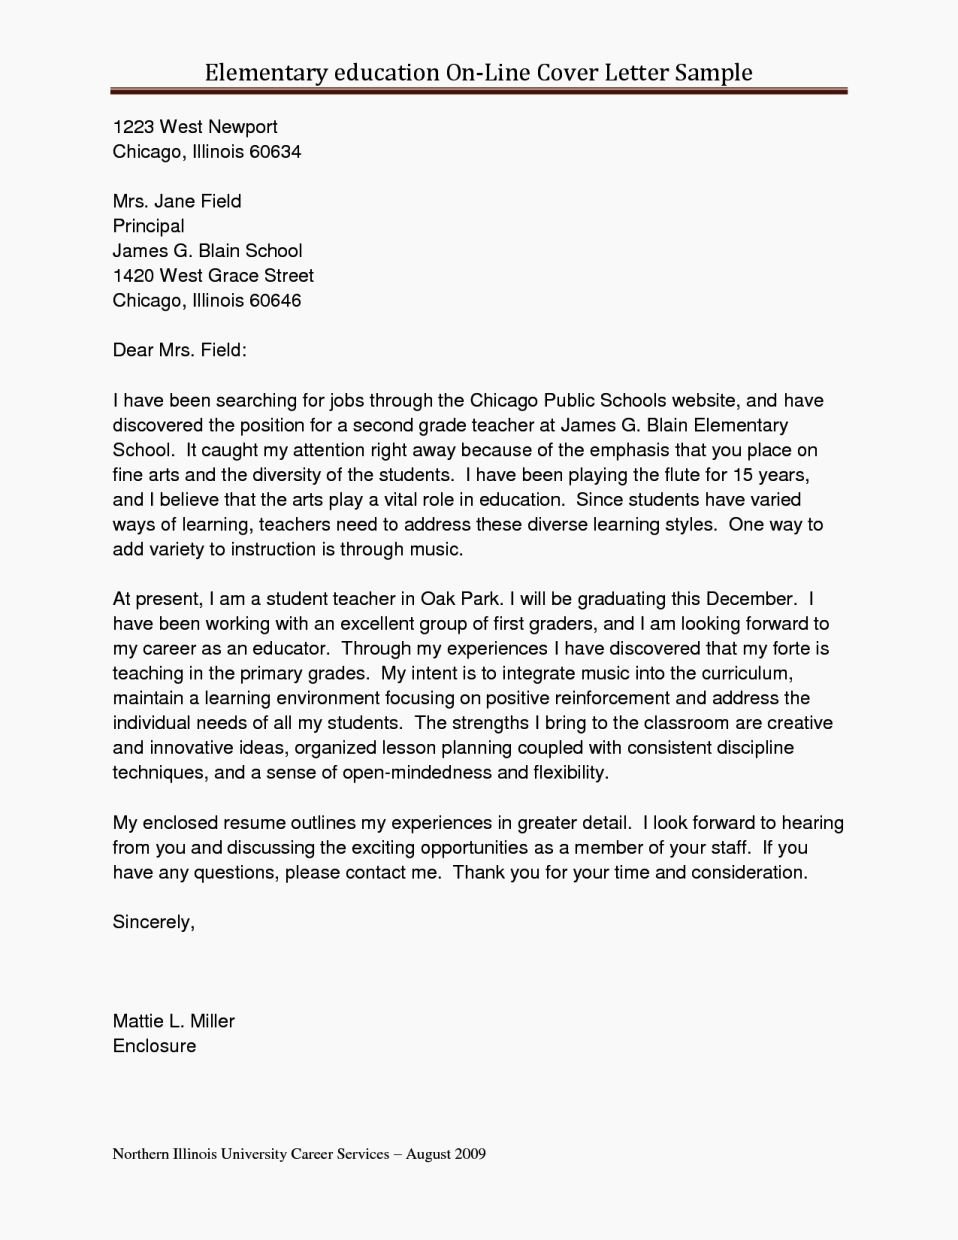 Experienced Teacher Cover Letter